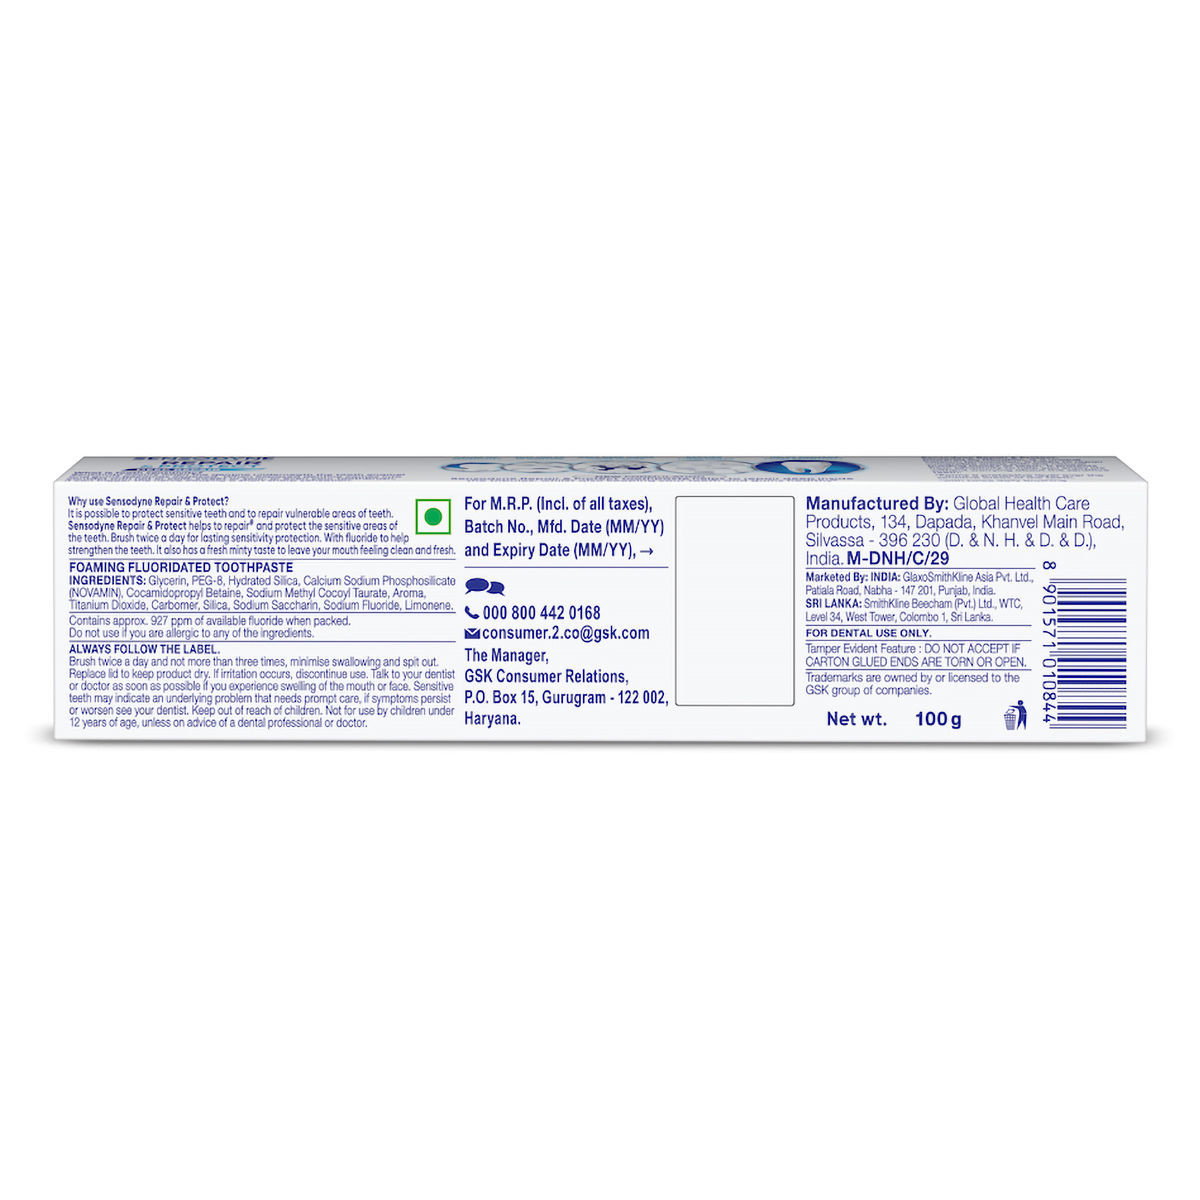 Sensodyne Repair & Protect Toothpaste, 100 gm, Pack of 1 